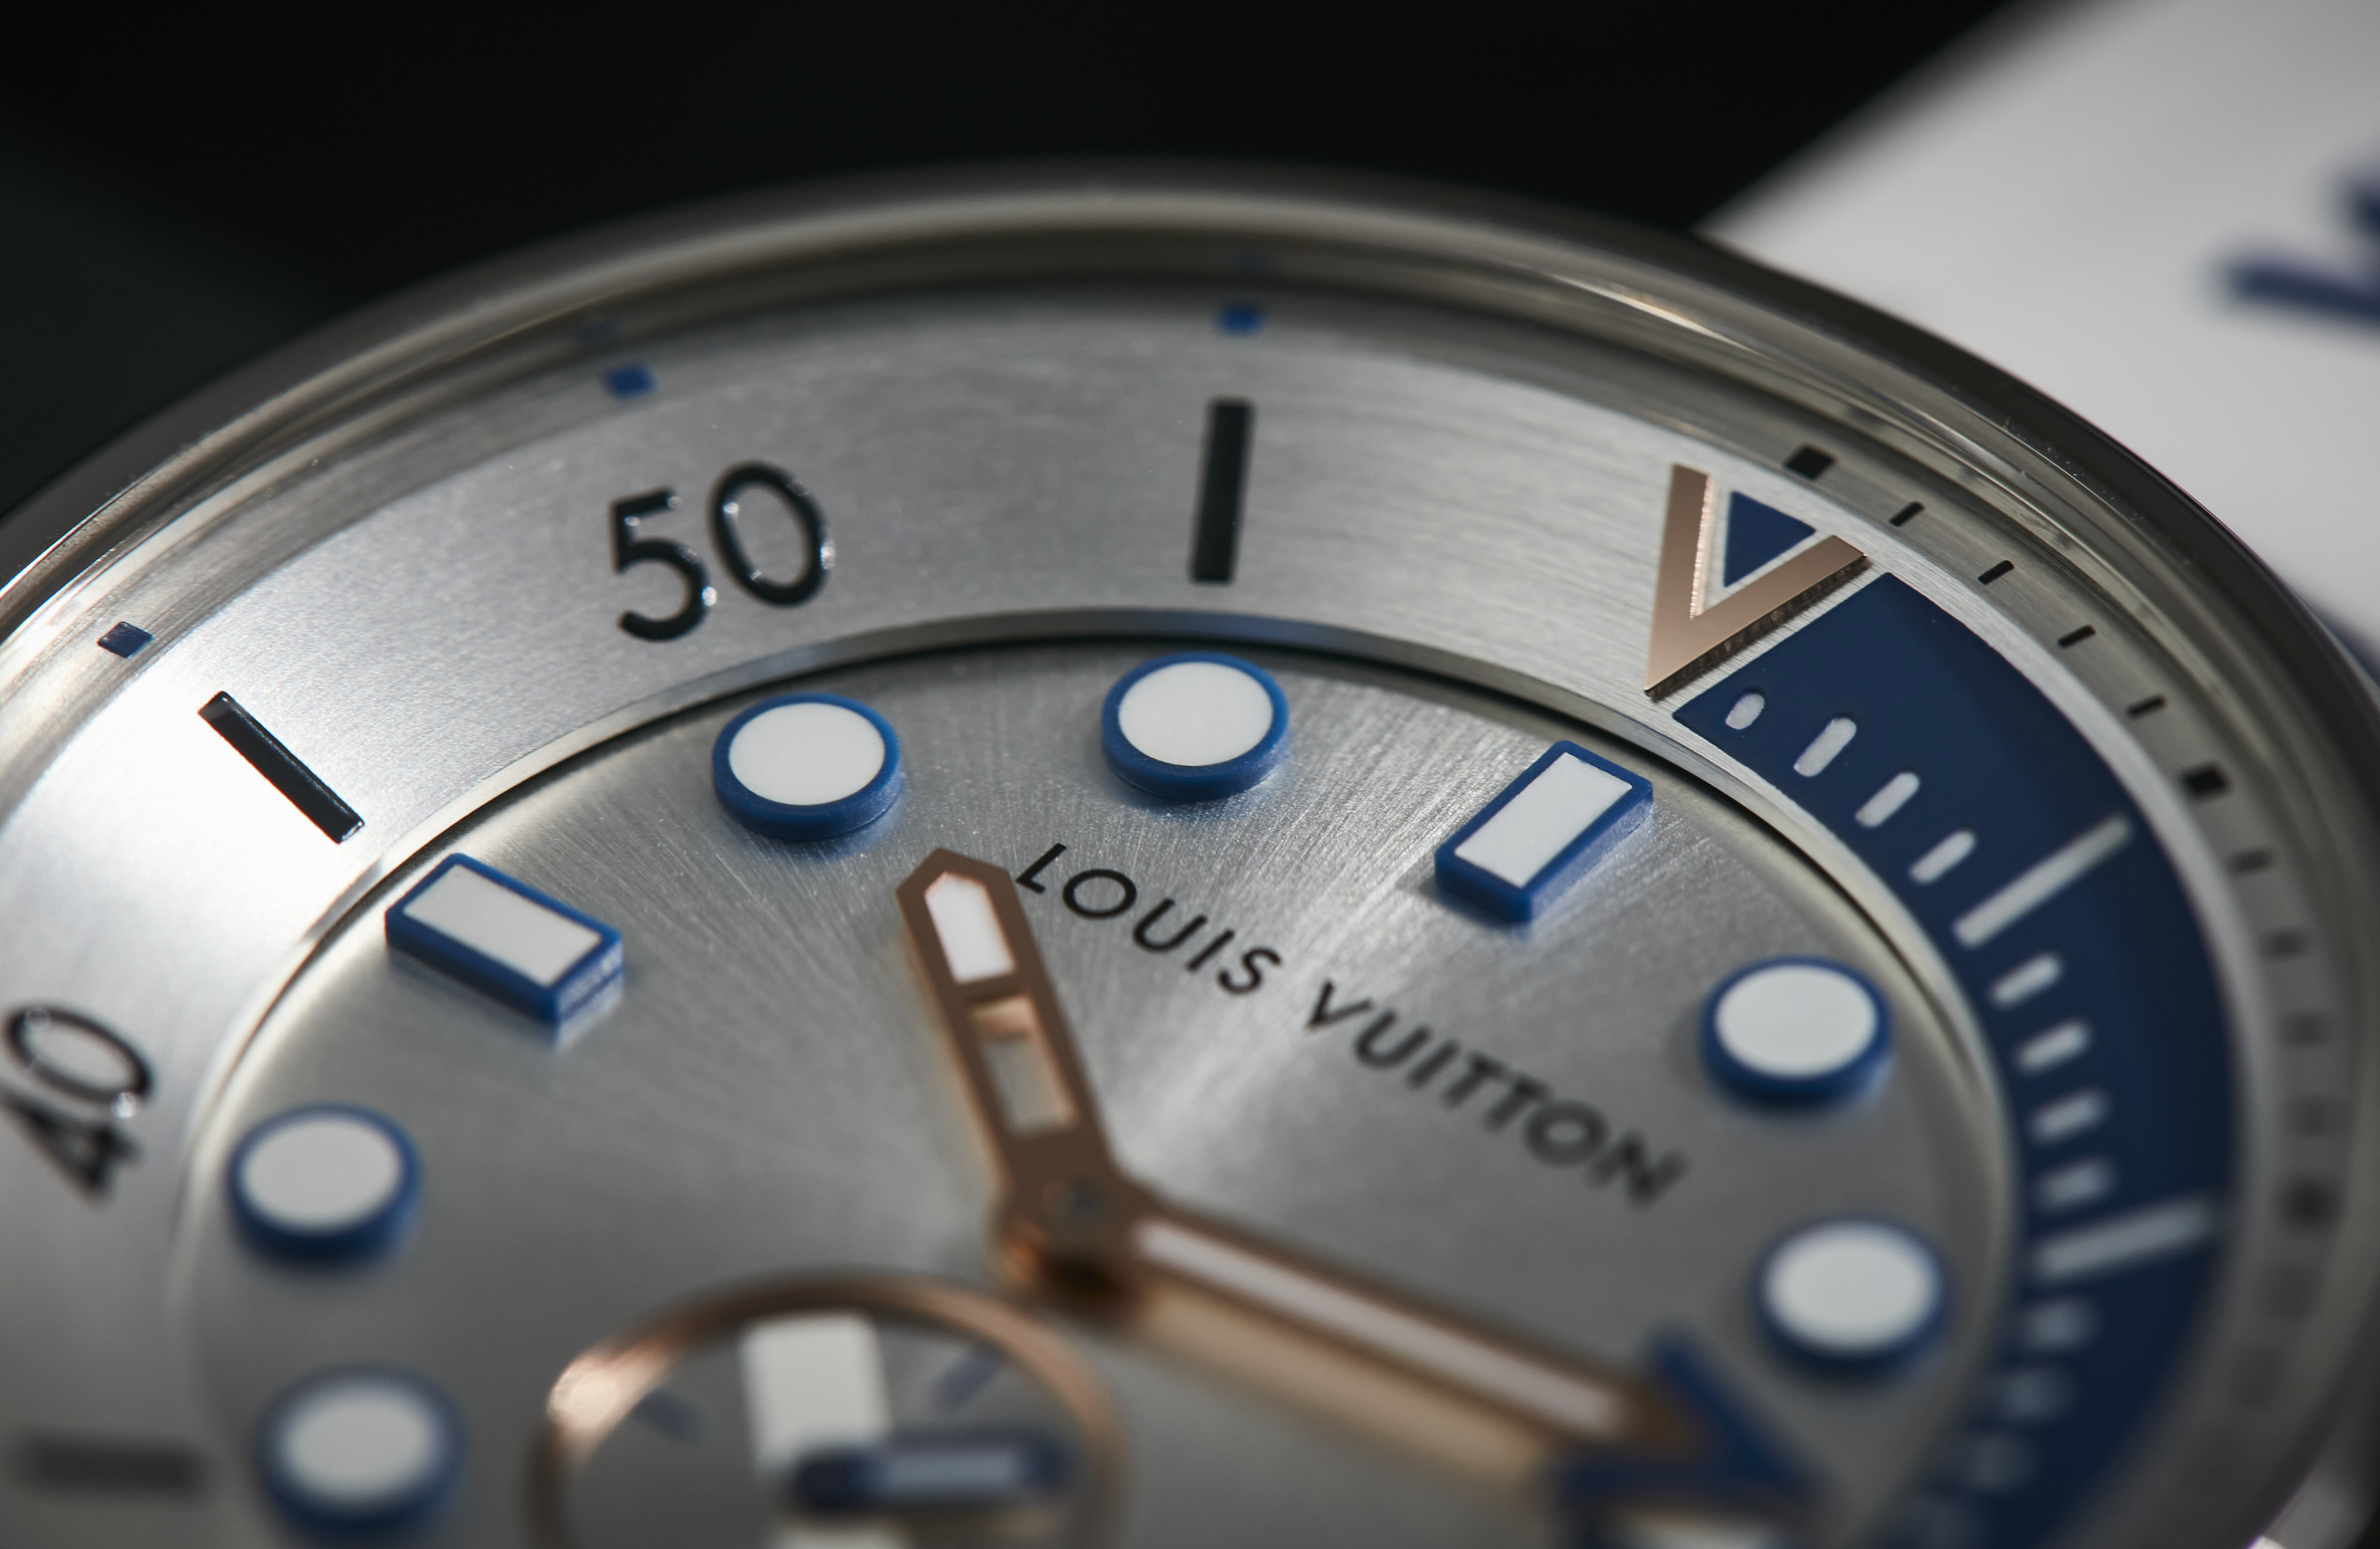 Introducing The Louis Vuitton Tambour Street Diver Chronograph